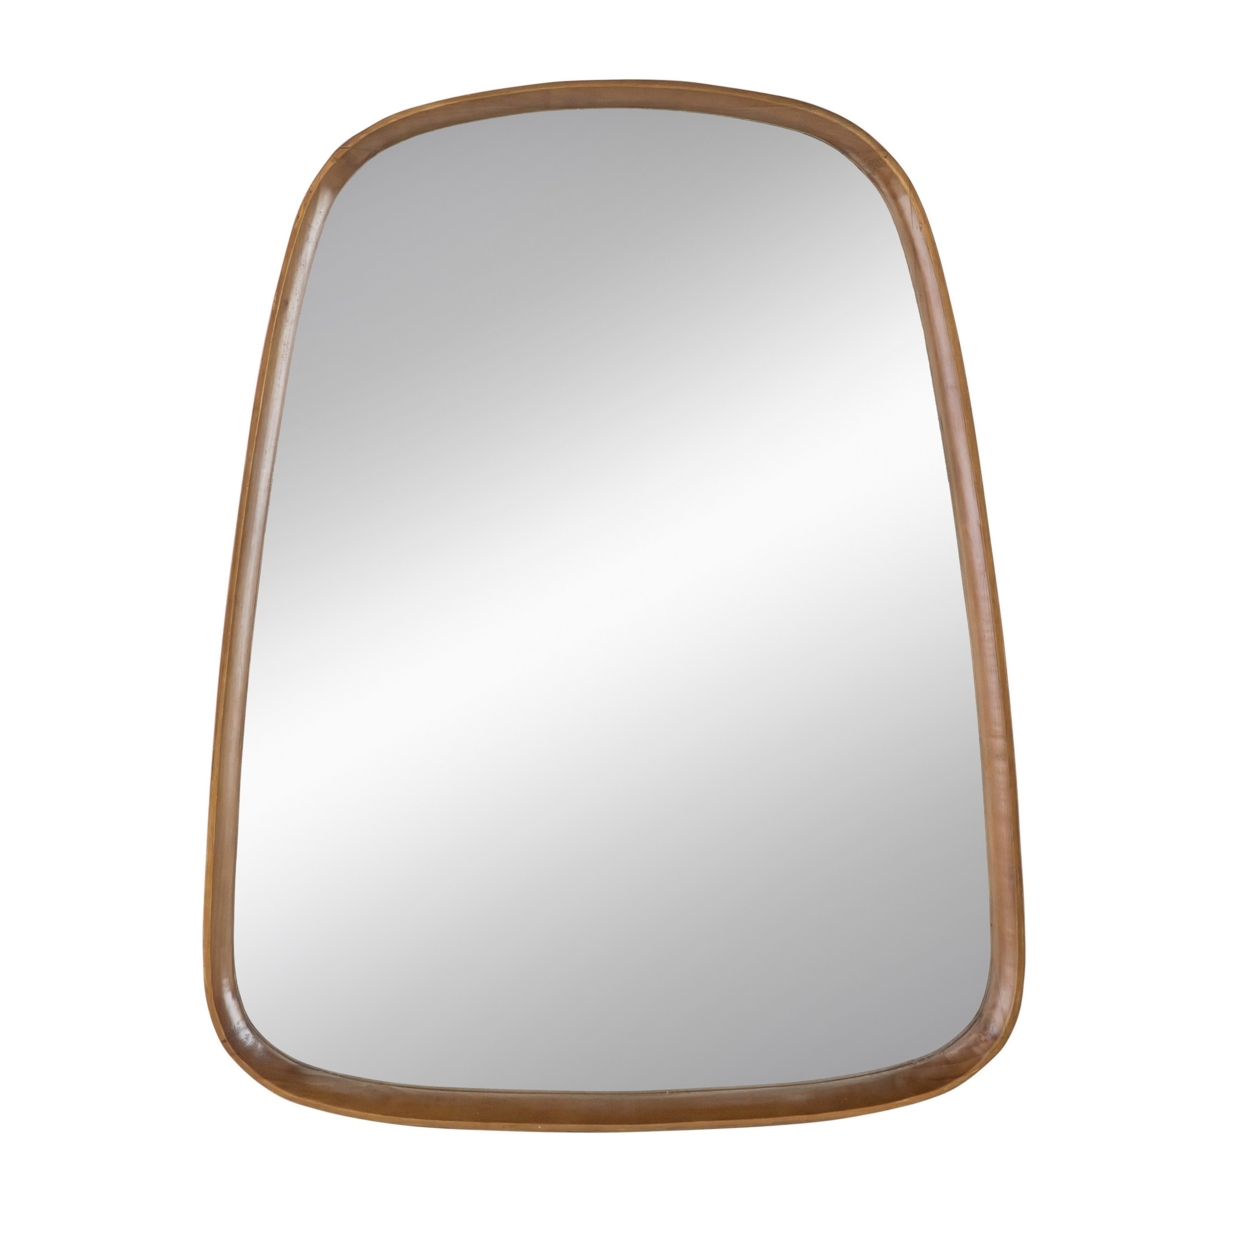 Roe 27 Inch Wall Mirror, Brown Curved Pine Wood Frame, Minimalistic- Saltoro Sherpi